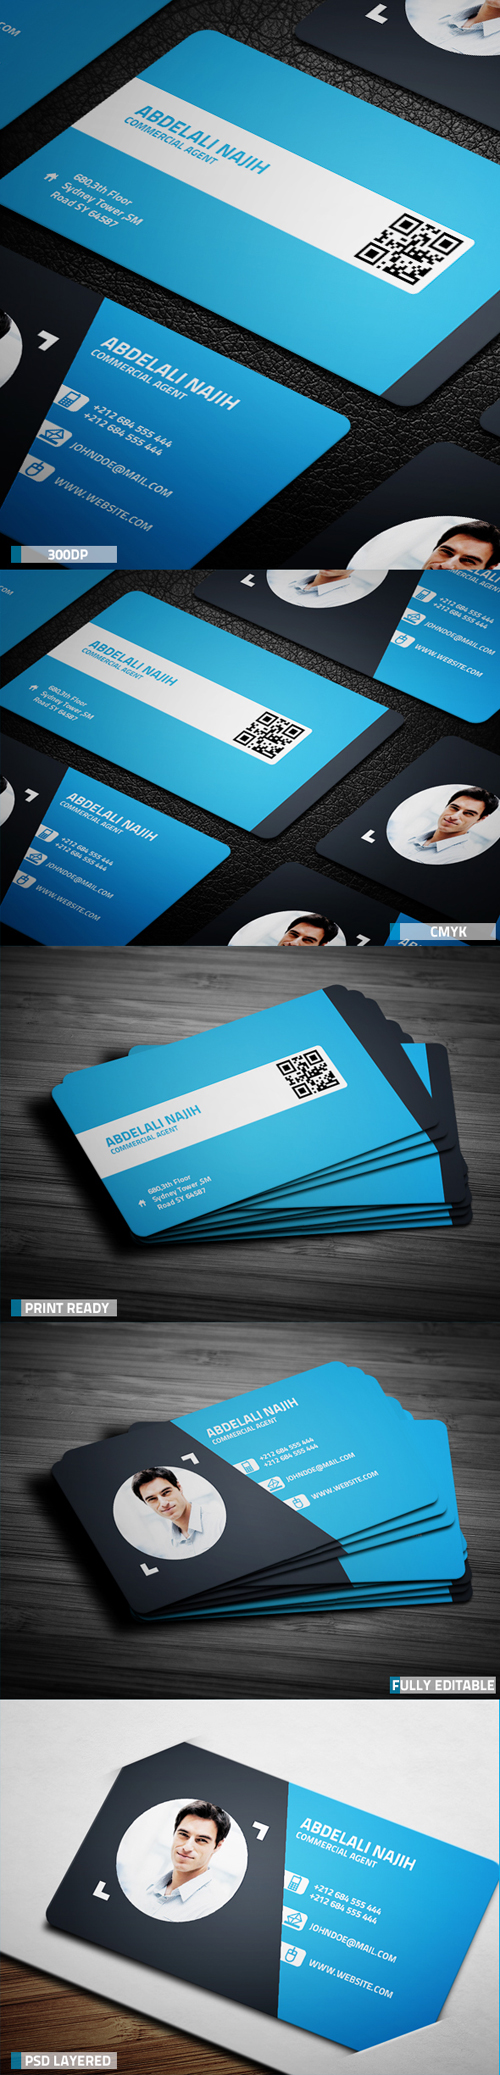 business cards template design - 9